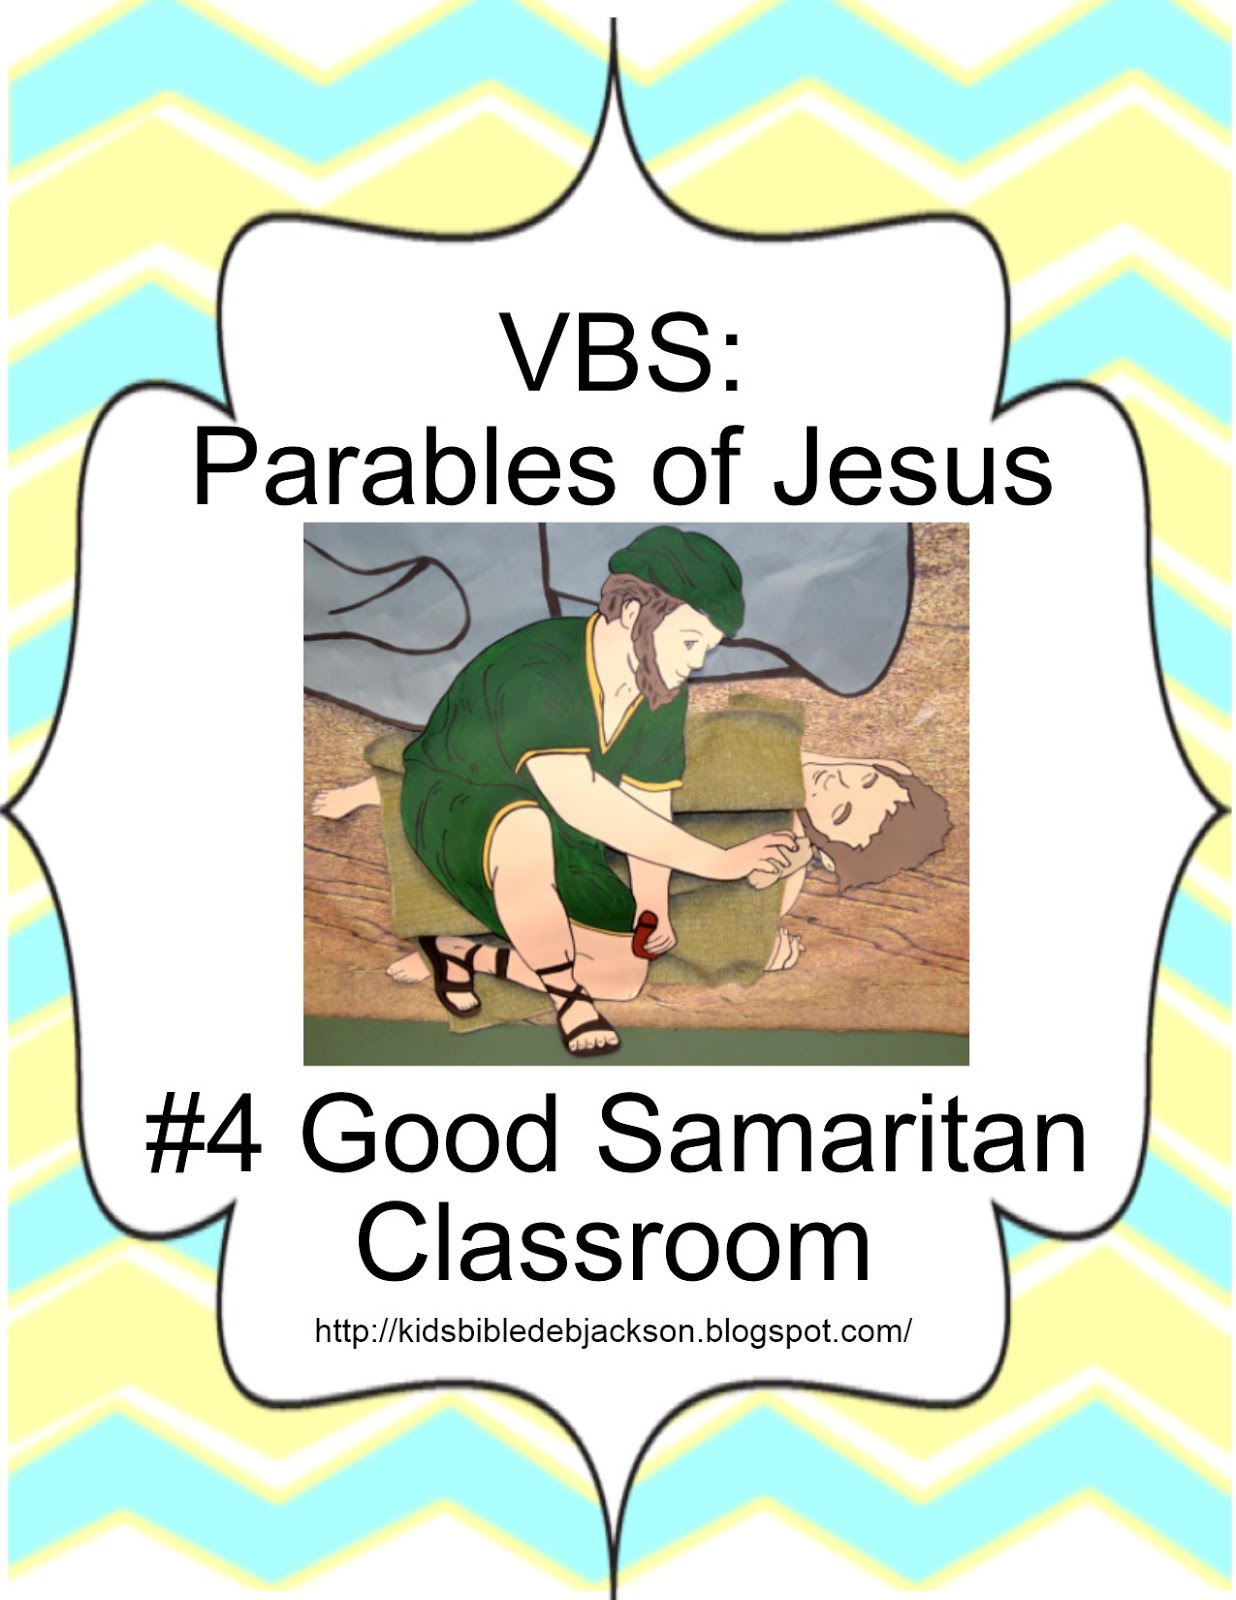 http://kidsbibledebjackson.blogspot.com/2014/06/parables-of-jesus-vbs-day-4-good.html